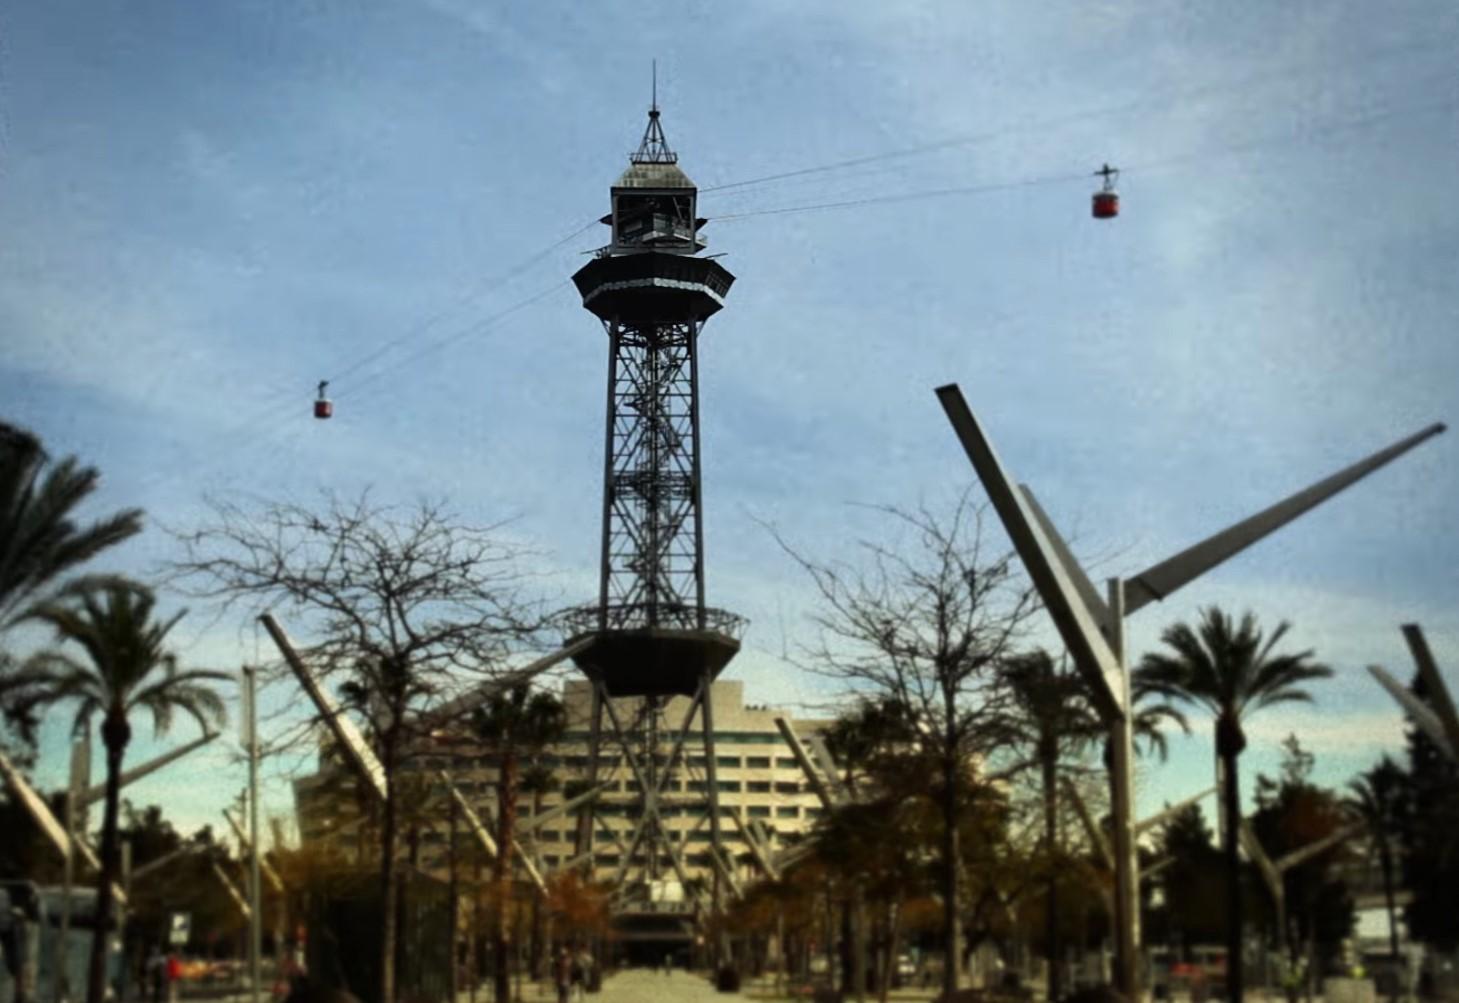 Teleférico del Puerto in Barcelona, Spain. 